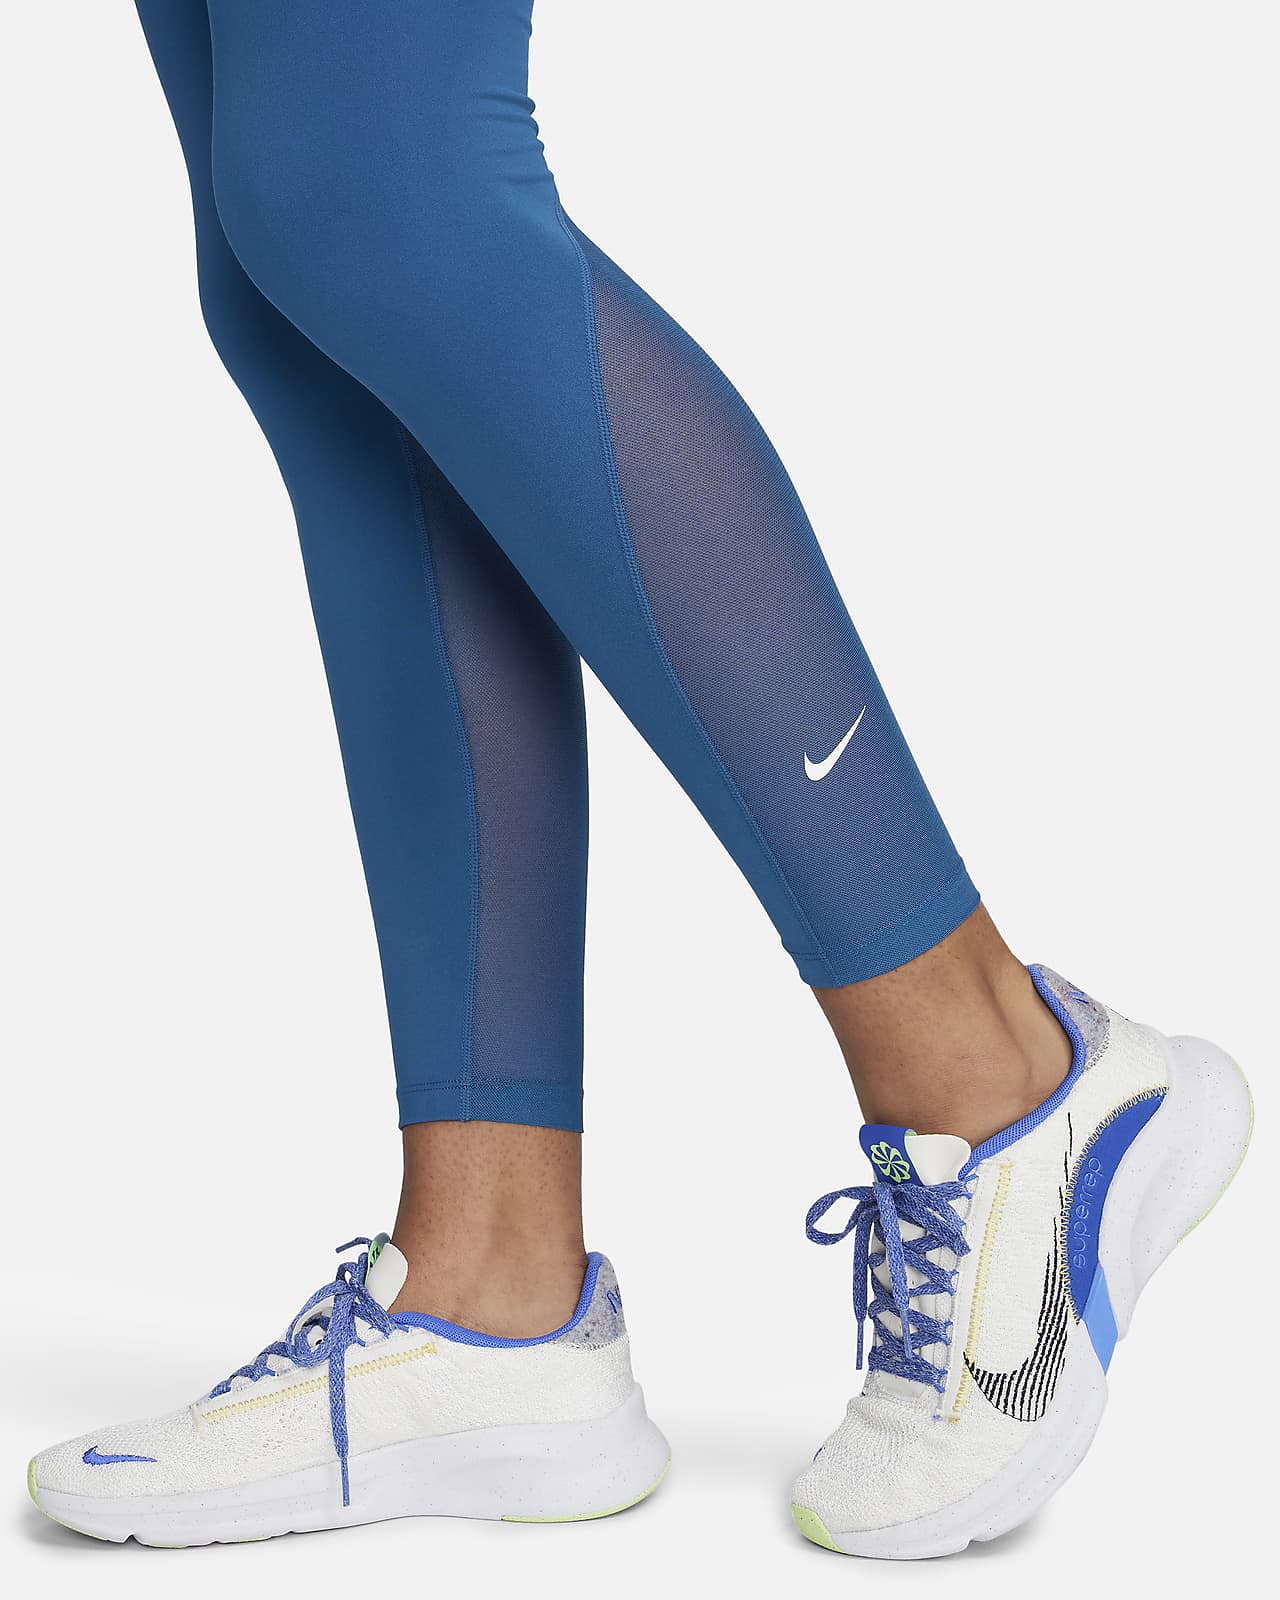 Nike One Women's Training Tights - Fireberry/White